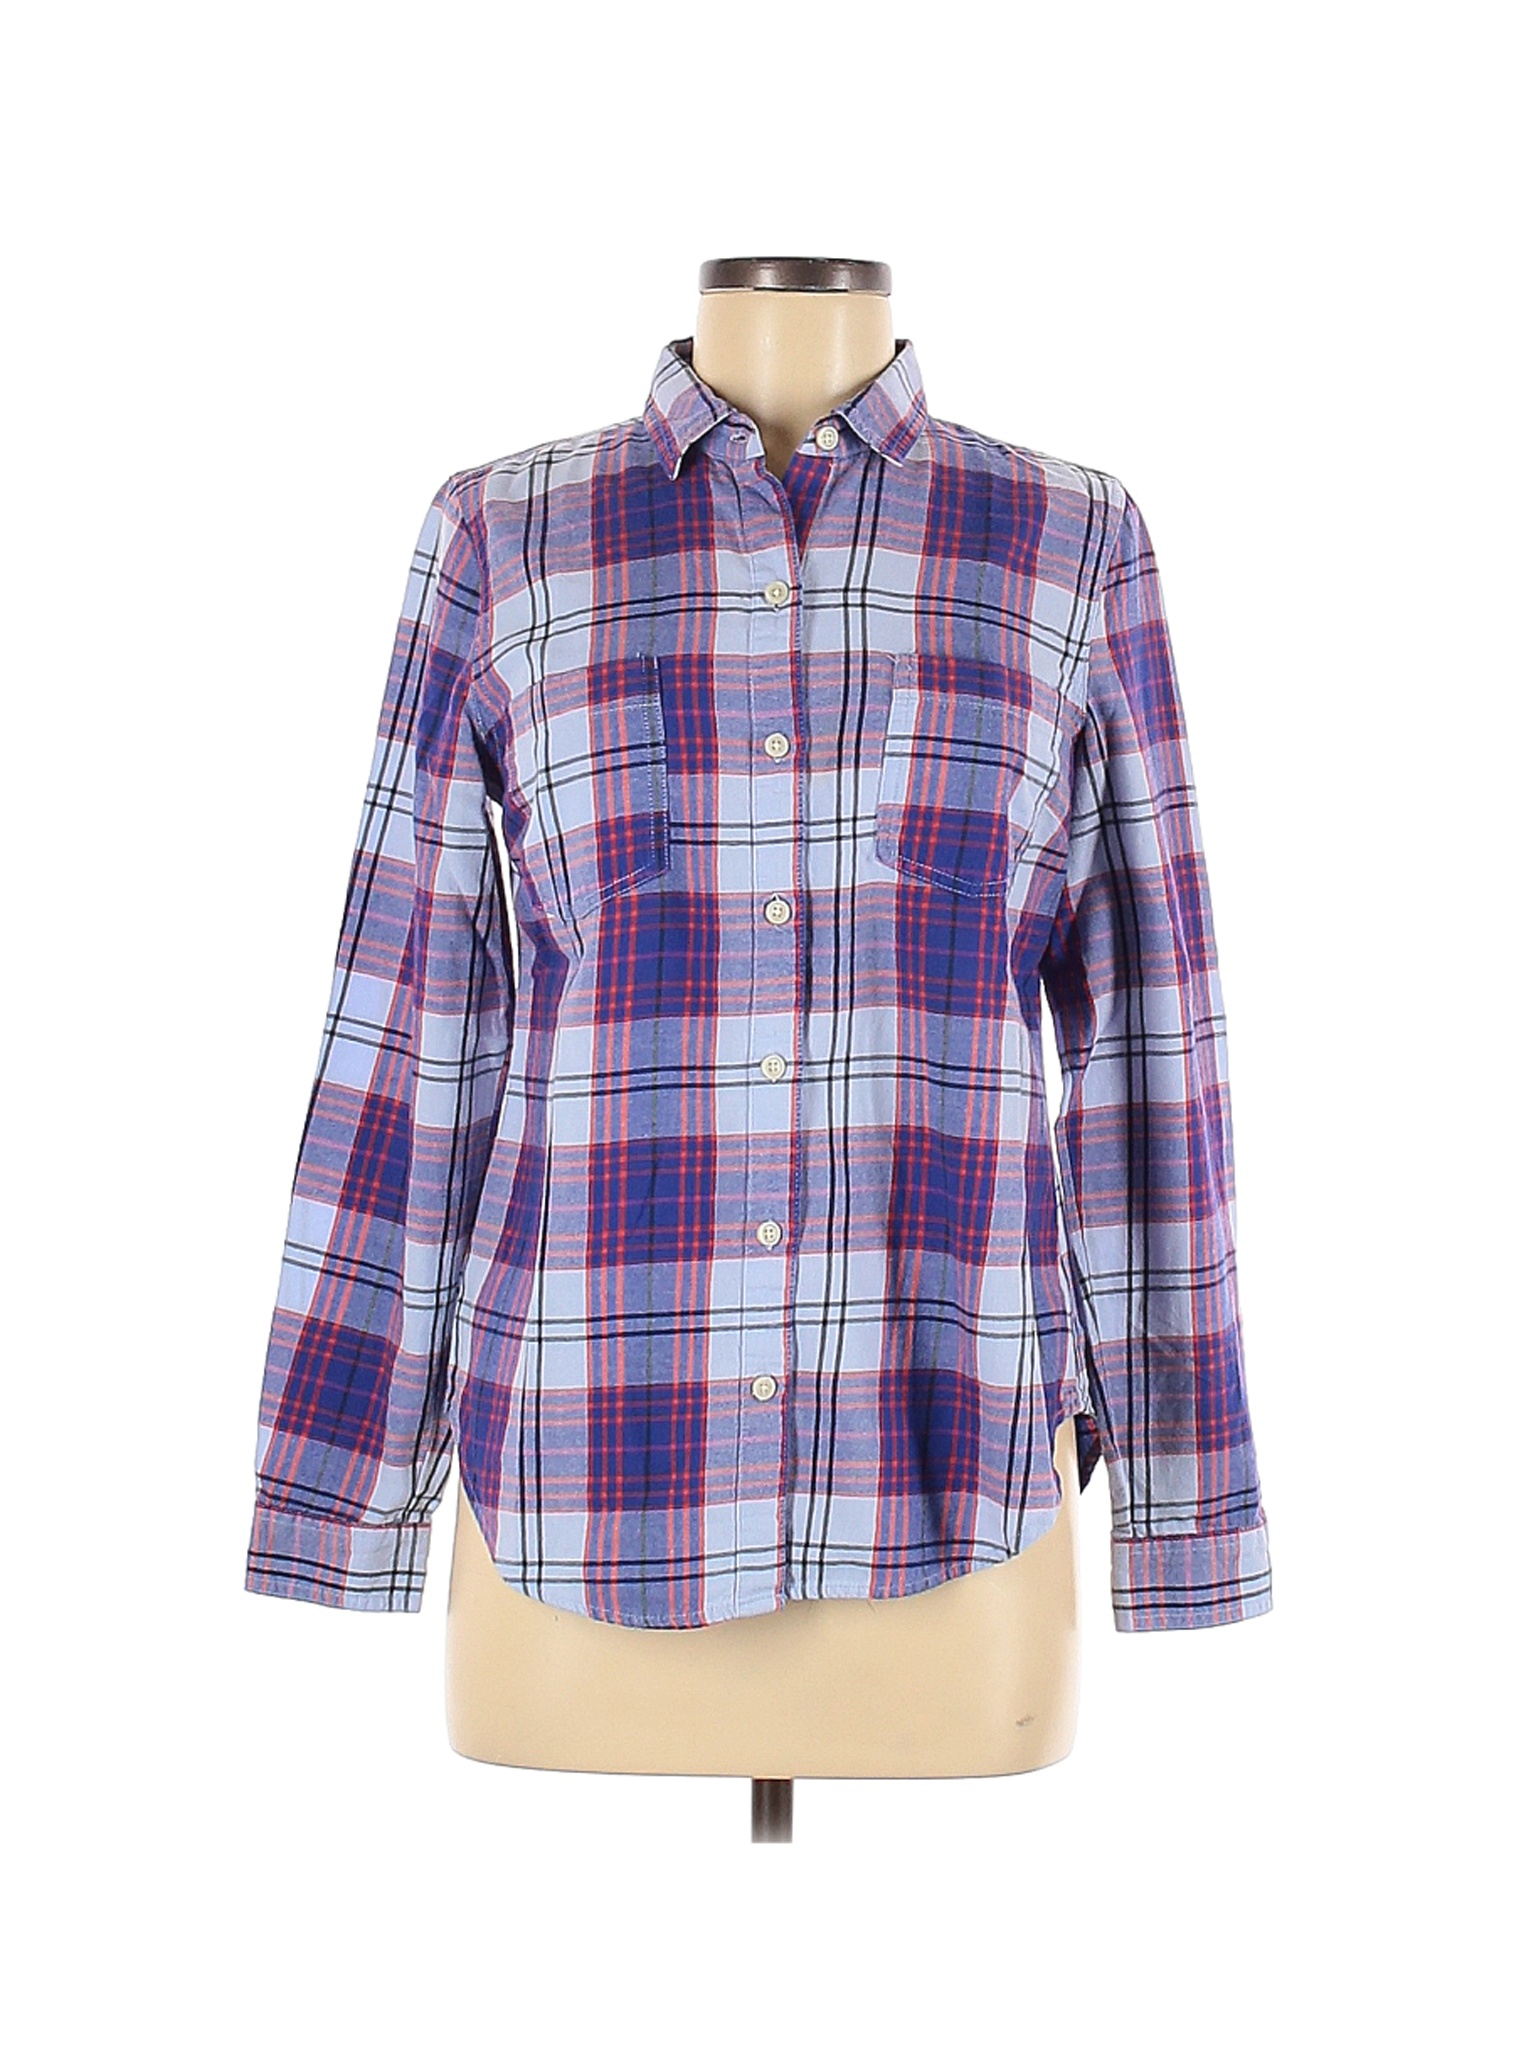 Old Navy Women Purple Long Sleeve Button-Down Shirt S | eBay